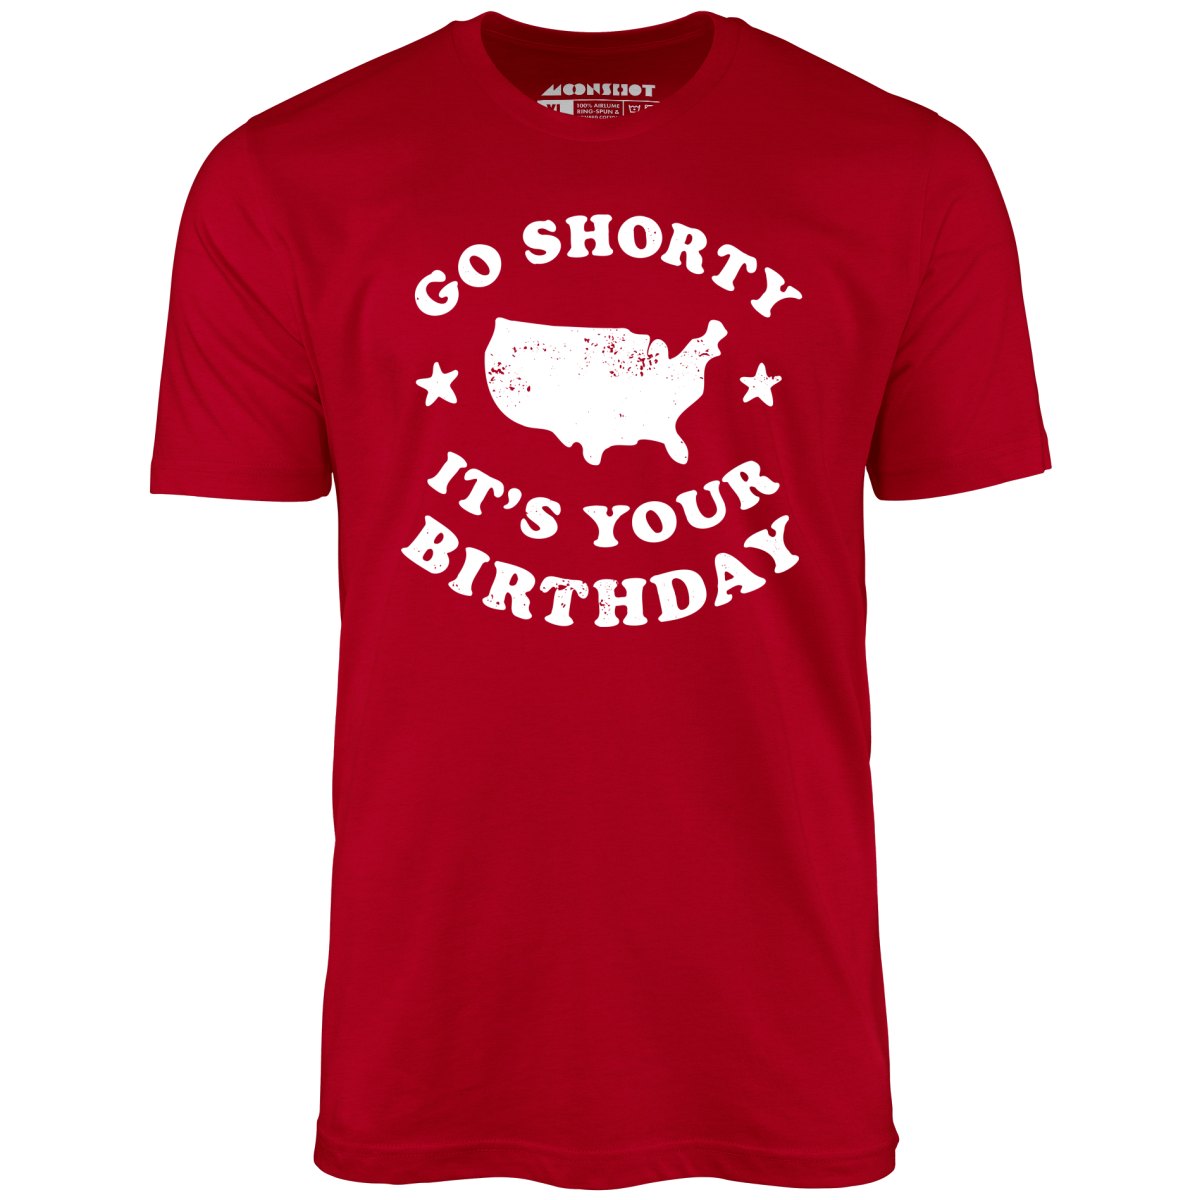 Go Shorty It's Your Birthday - Unisex T-Shirt